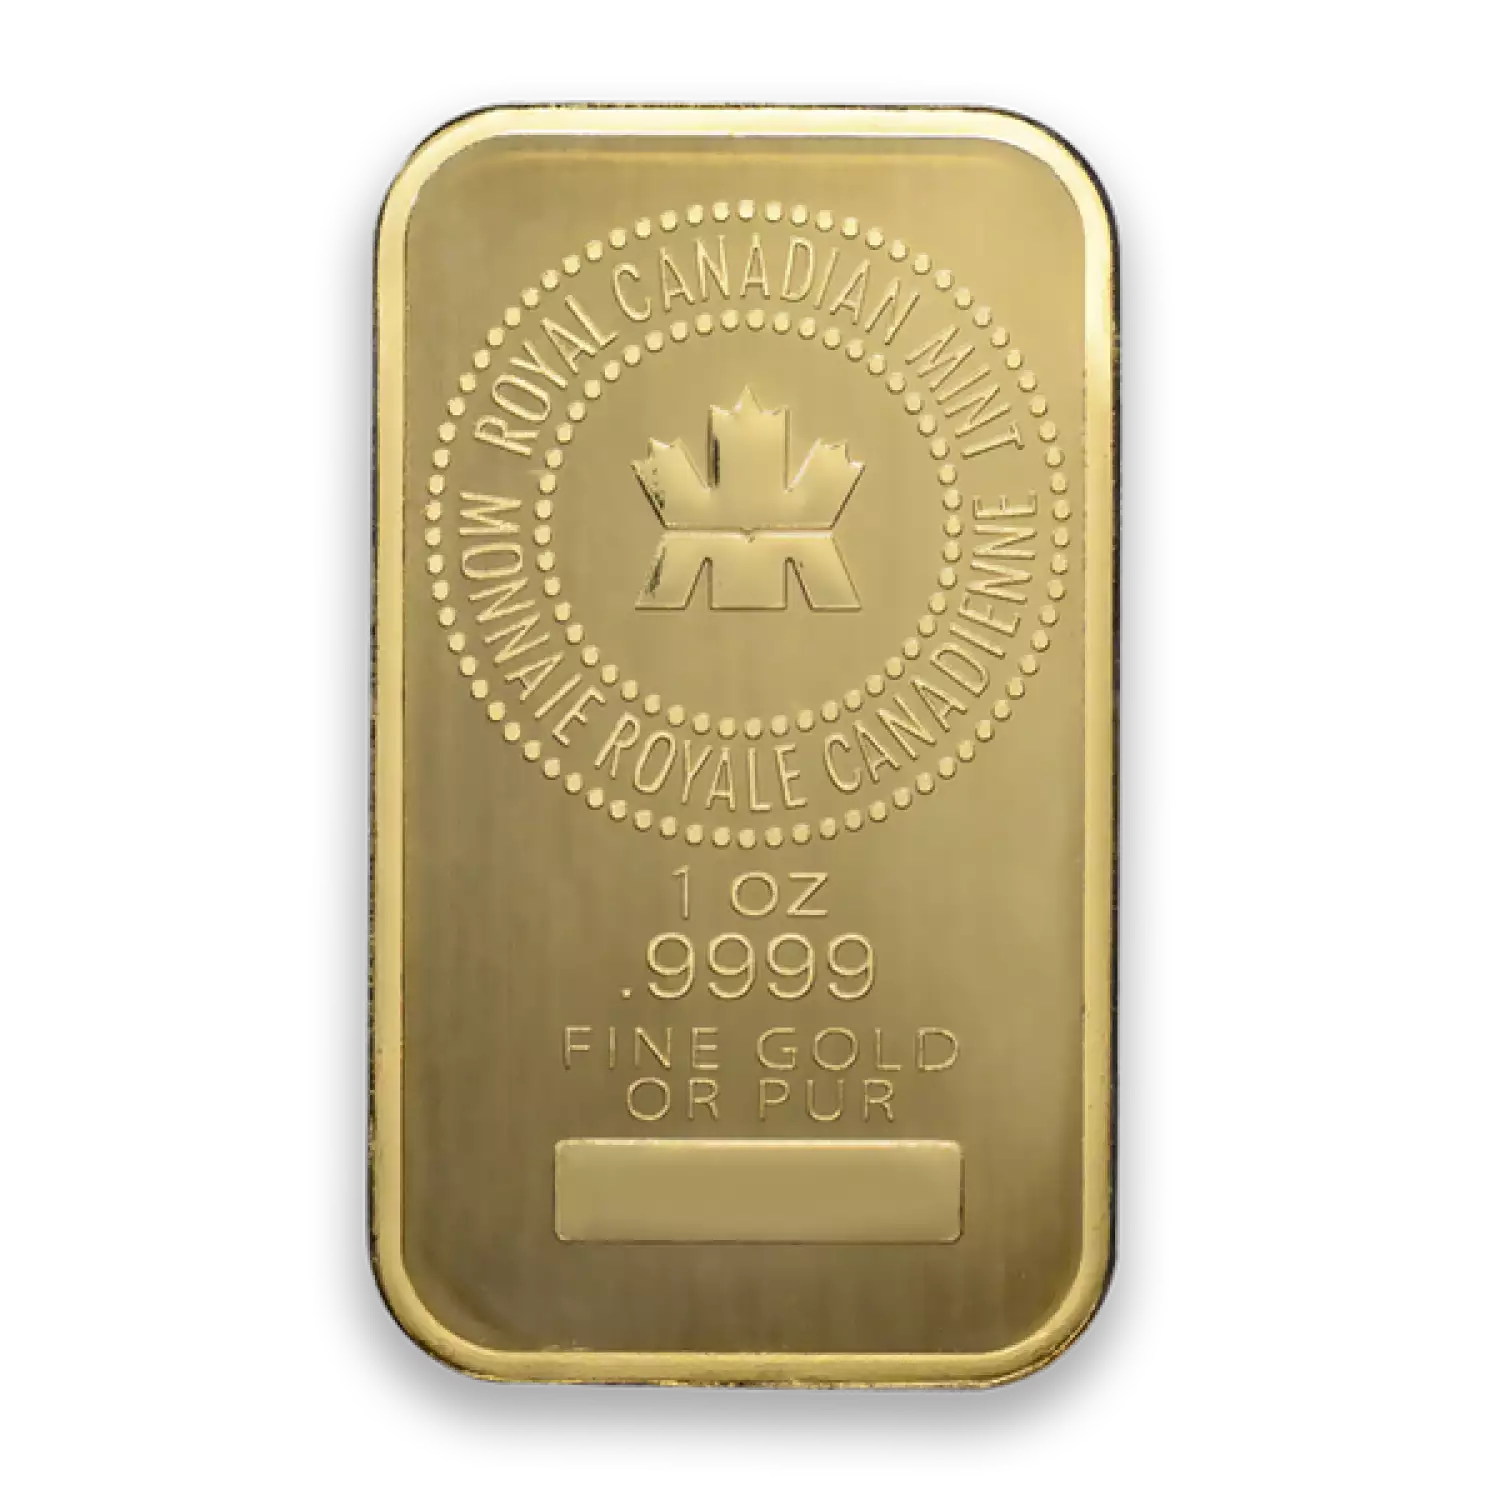 1oz Royal Canadian Mint Gold Bar